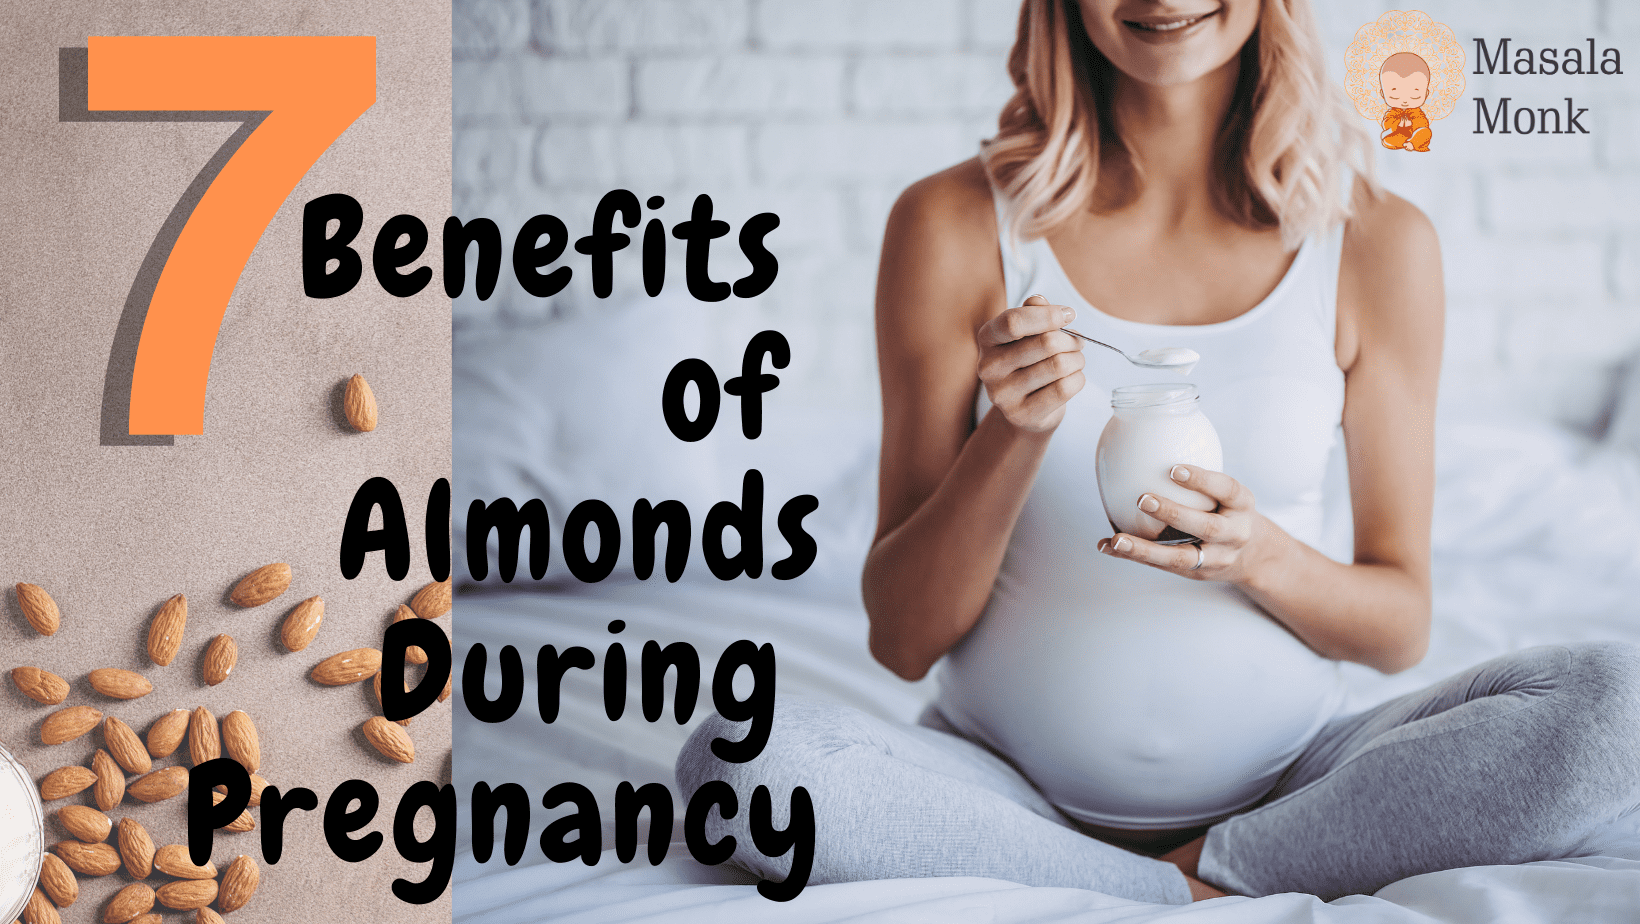 MM Blog_Almonds in Pregnancy